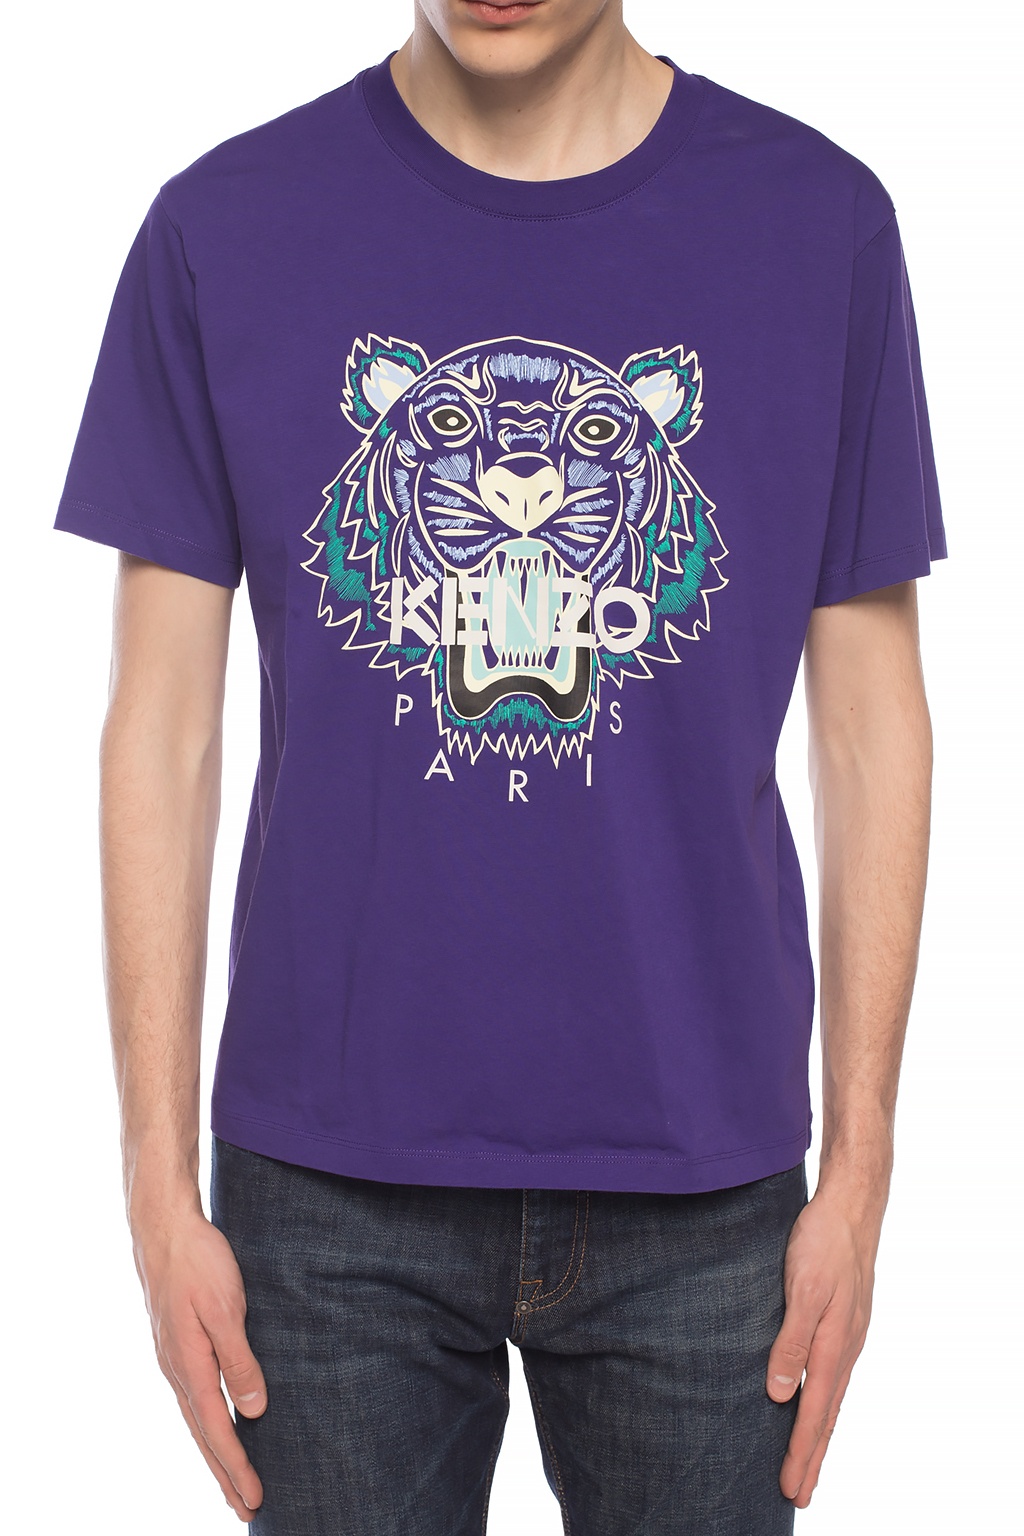 kenzo purple shirt